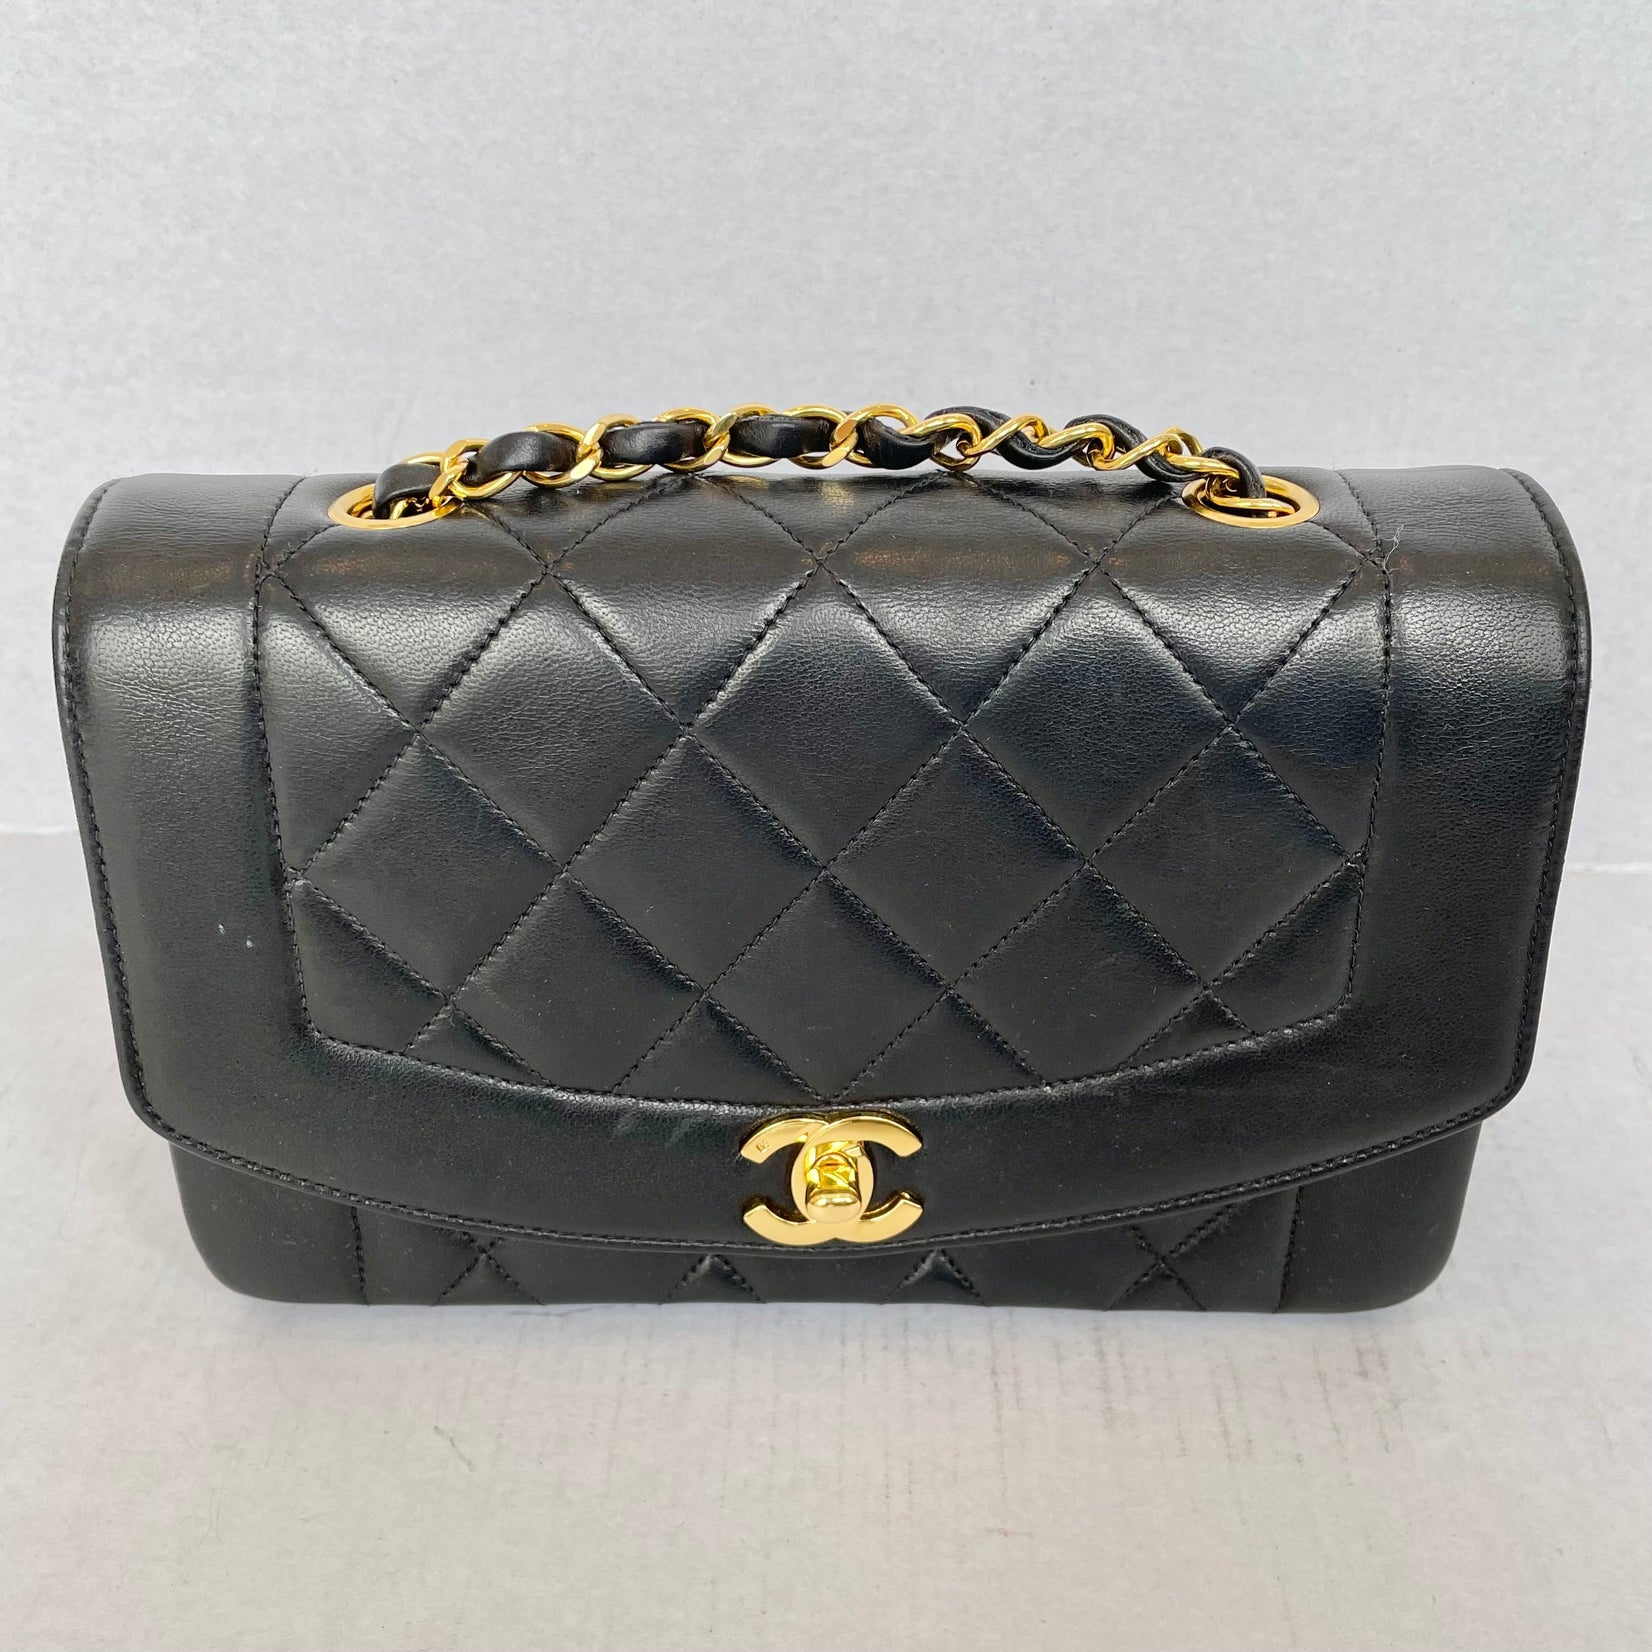 Rare Chanel Diana Shoulder Bag Black Quilted Lambskin Leather, 1990s France